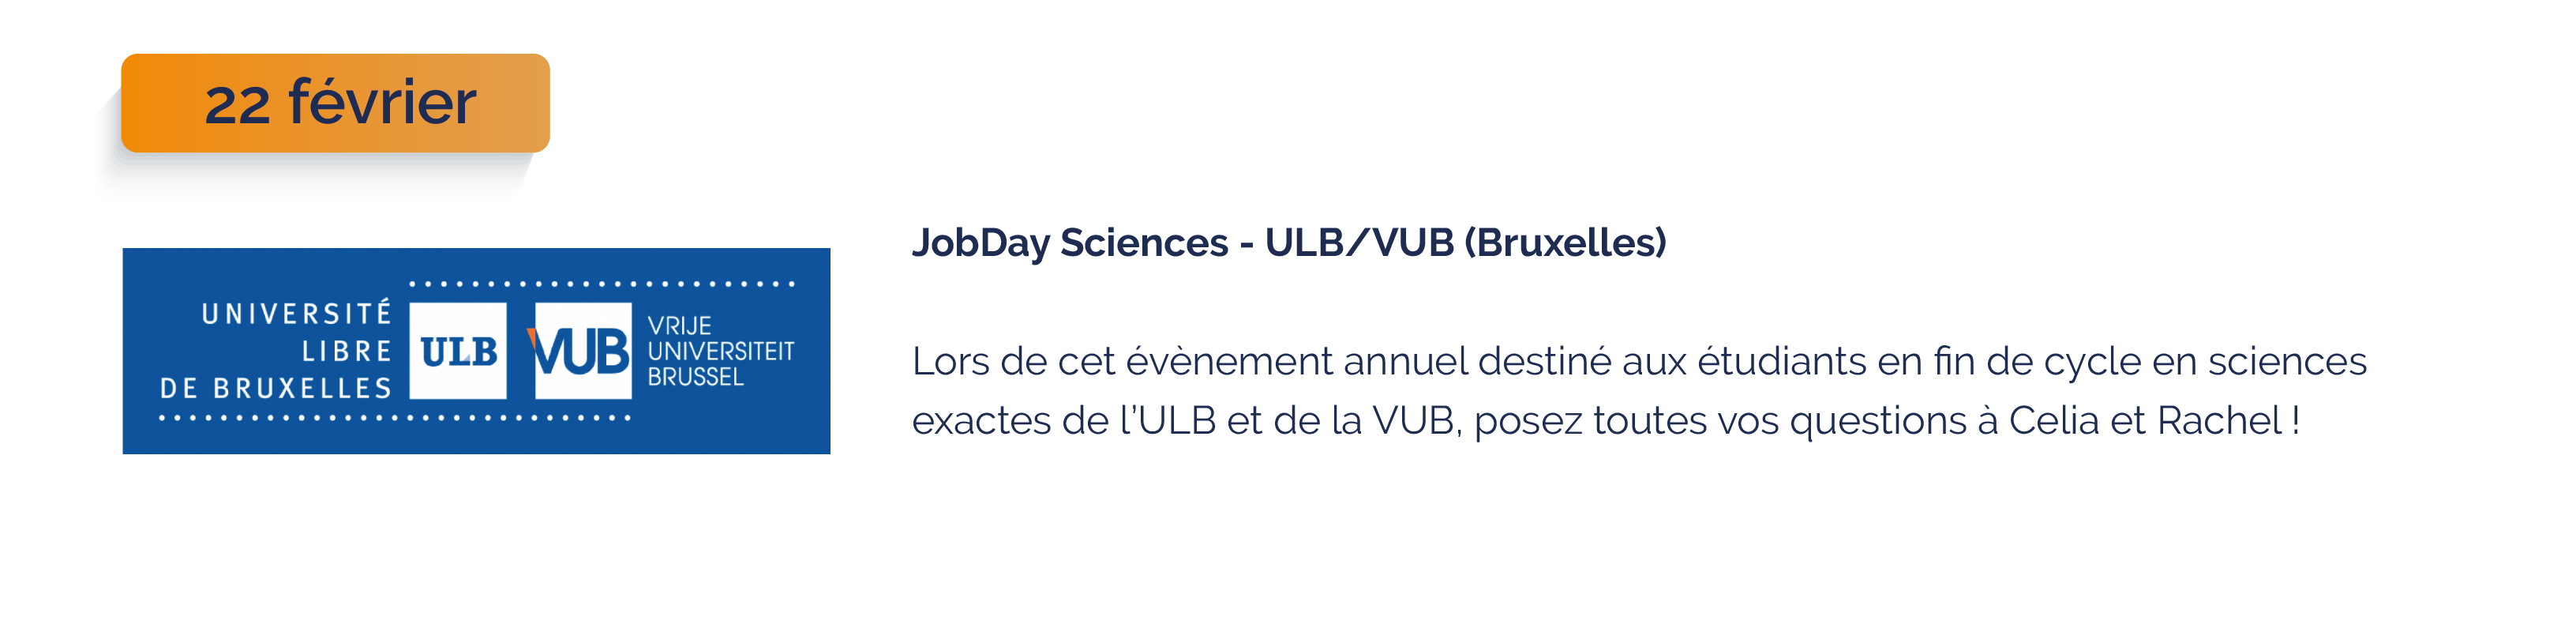 JobDay – Sciences ULB/VUB 